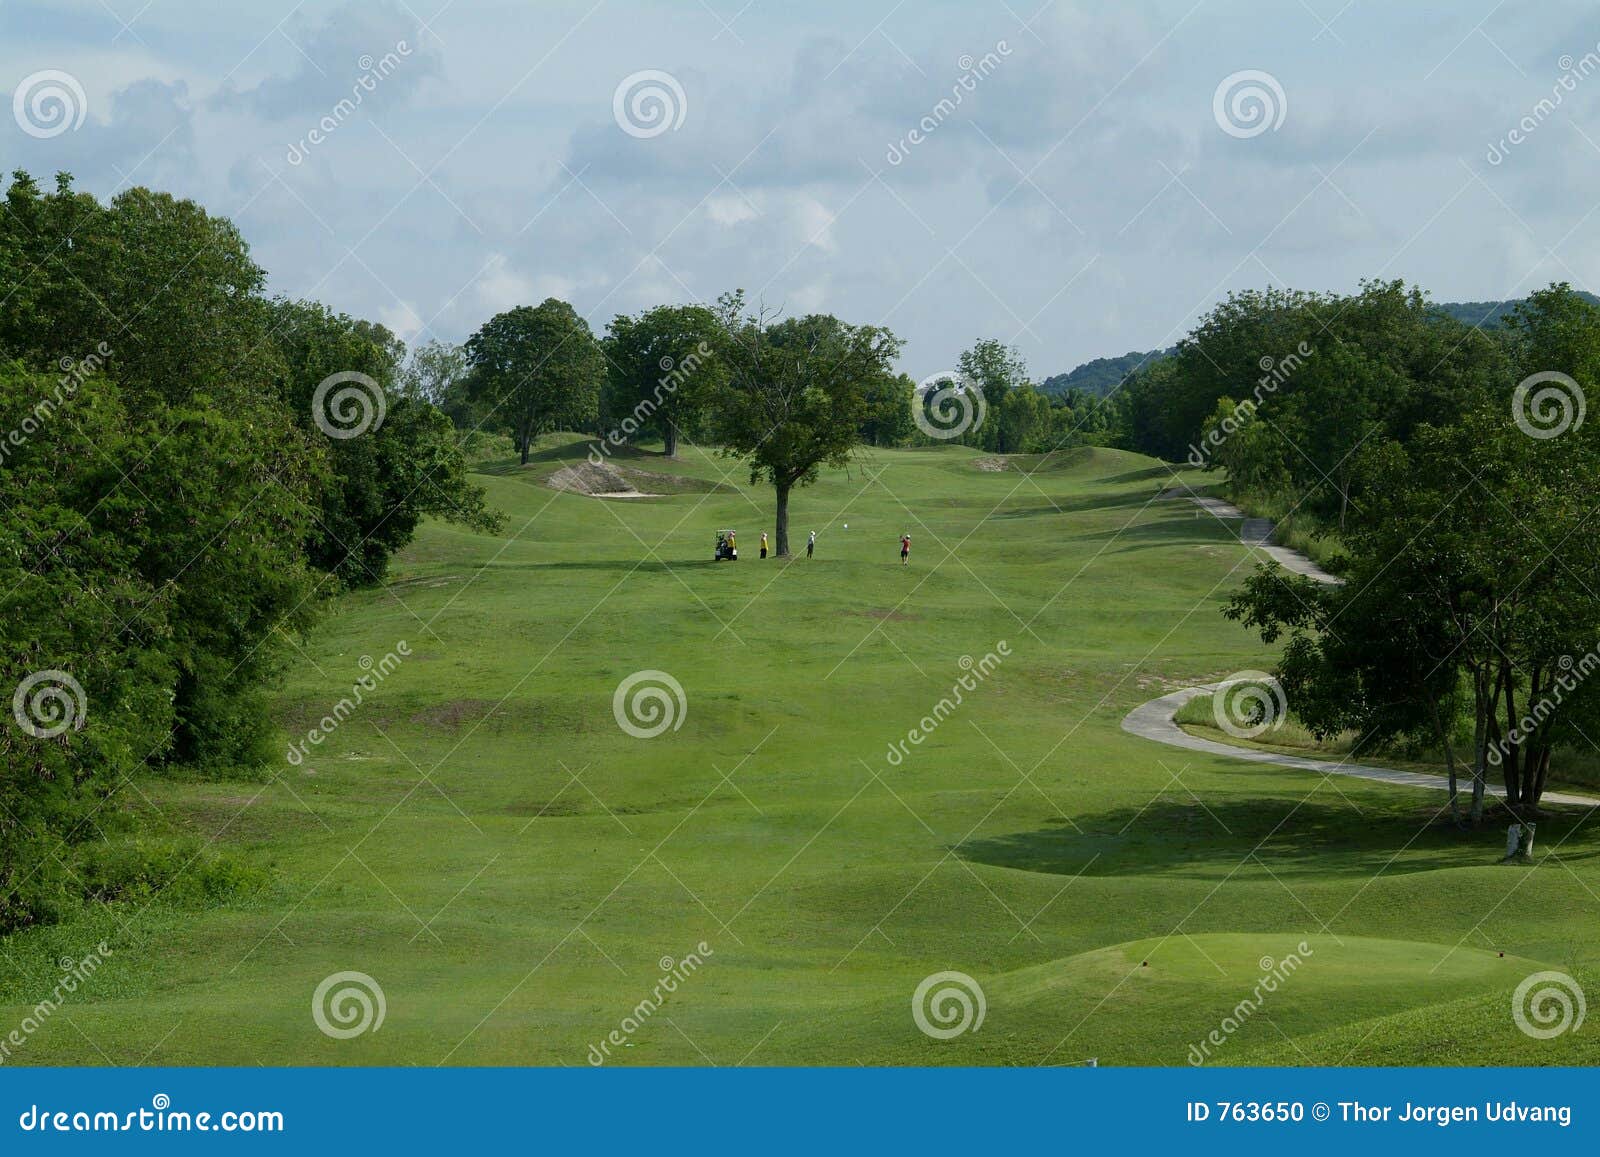 fairway of par five golf hole